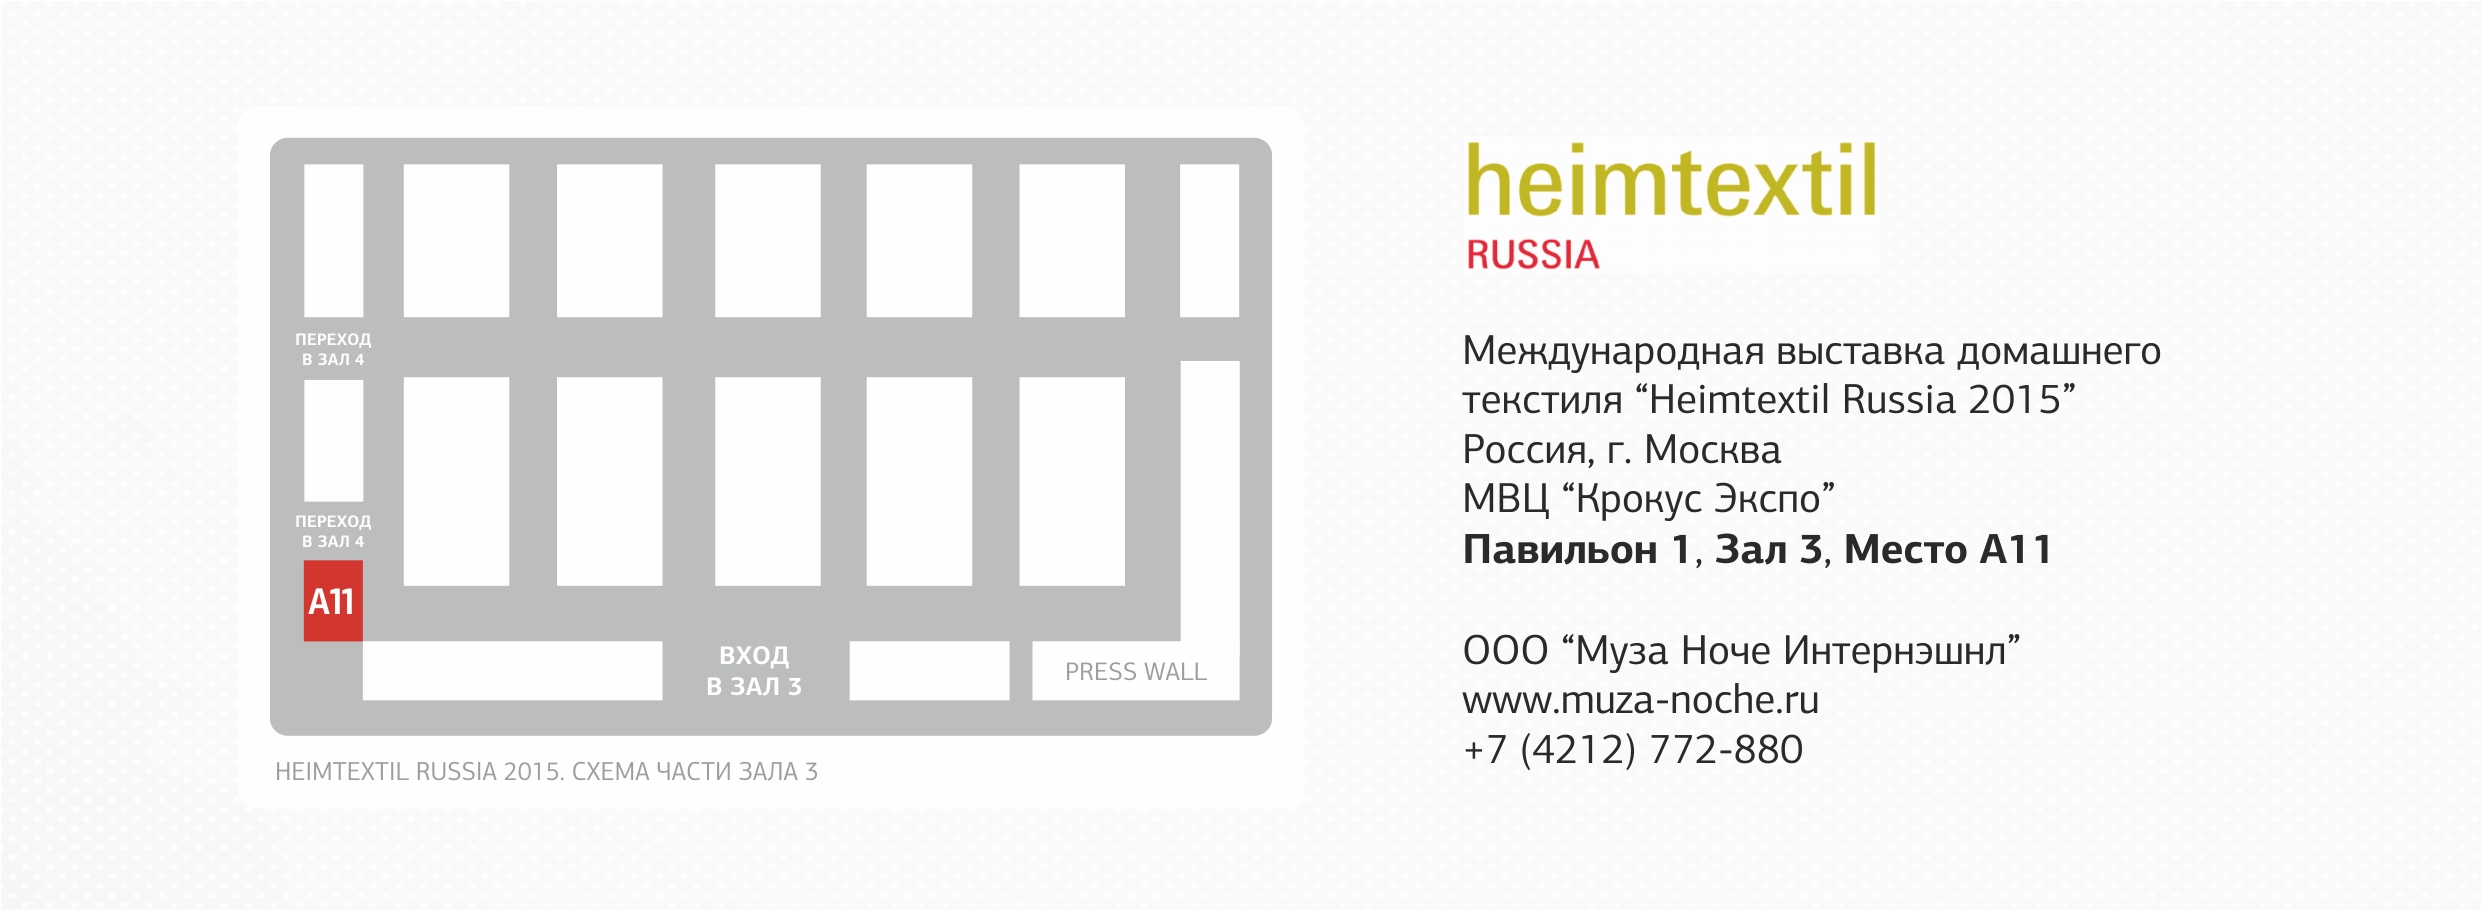 приглашение muza noche на heimtextil russia 2015